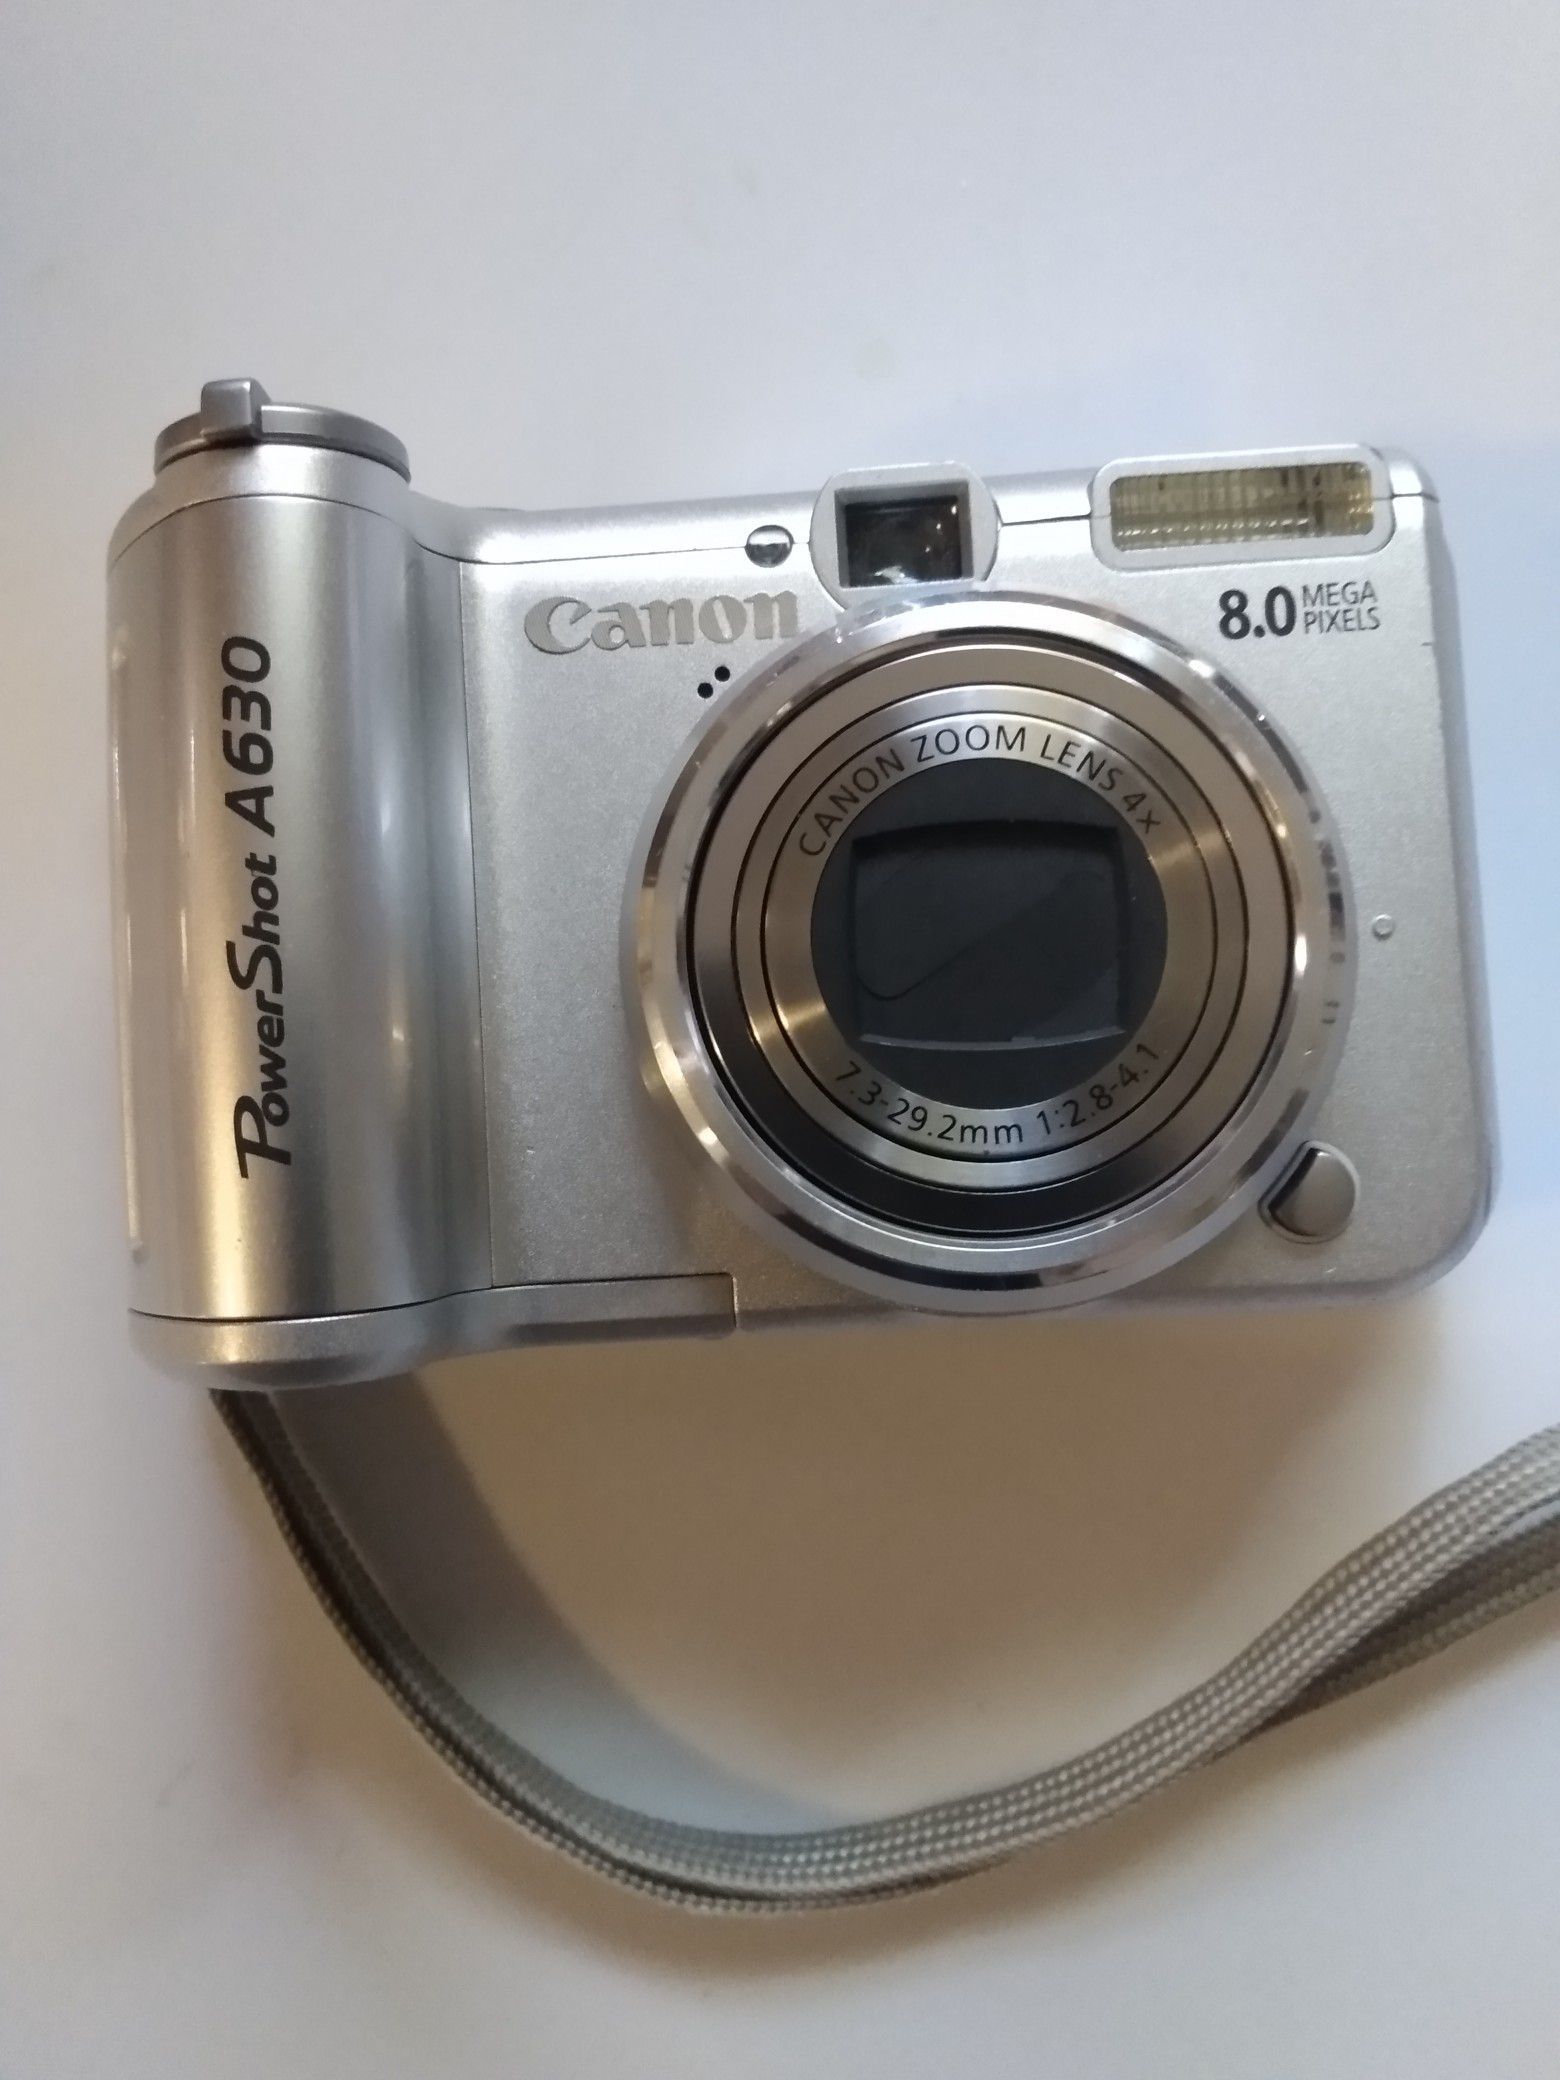 Canon powershot A630 digital camera